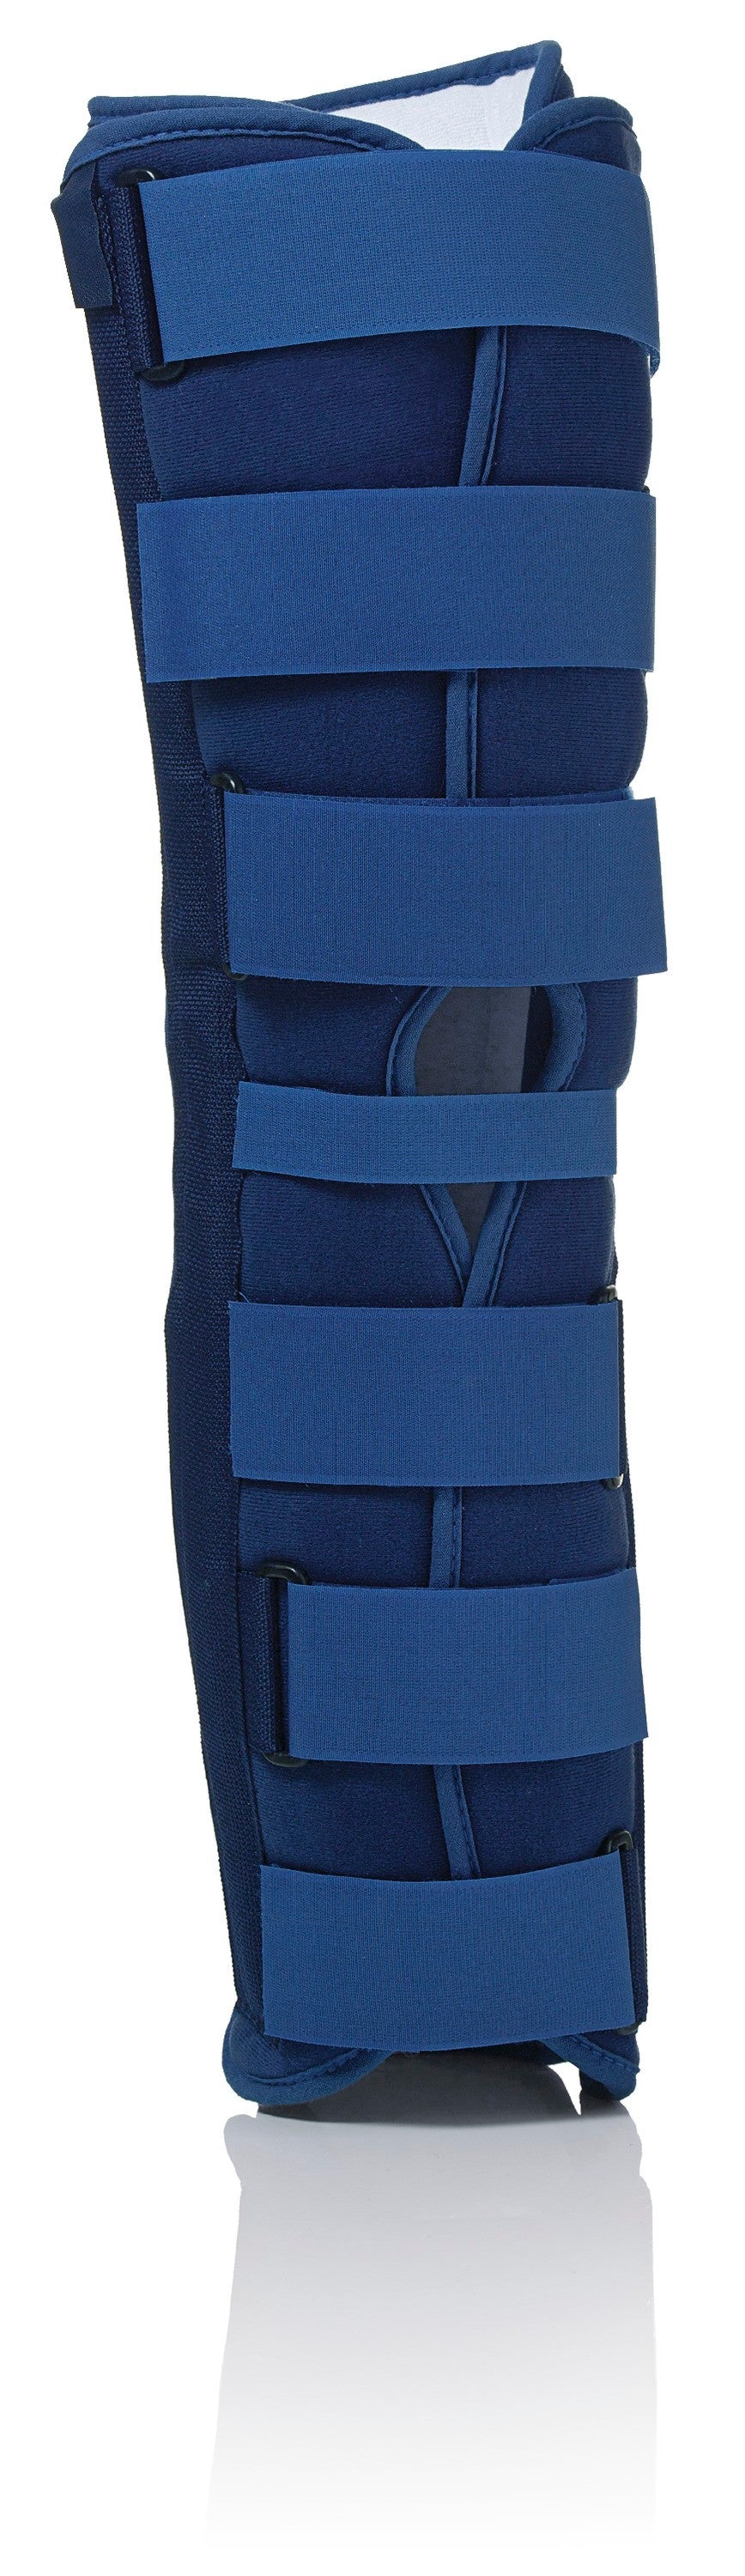 Actimove® Genu Tri-Panel Knee Immobilizer